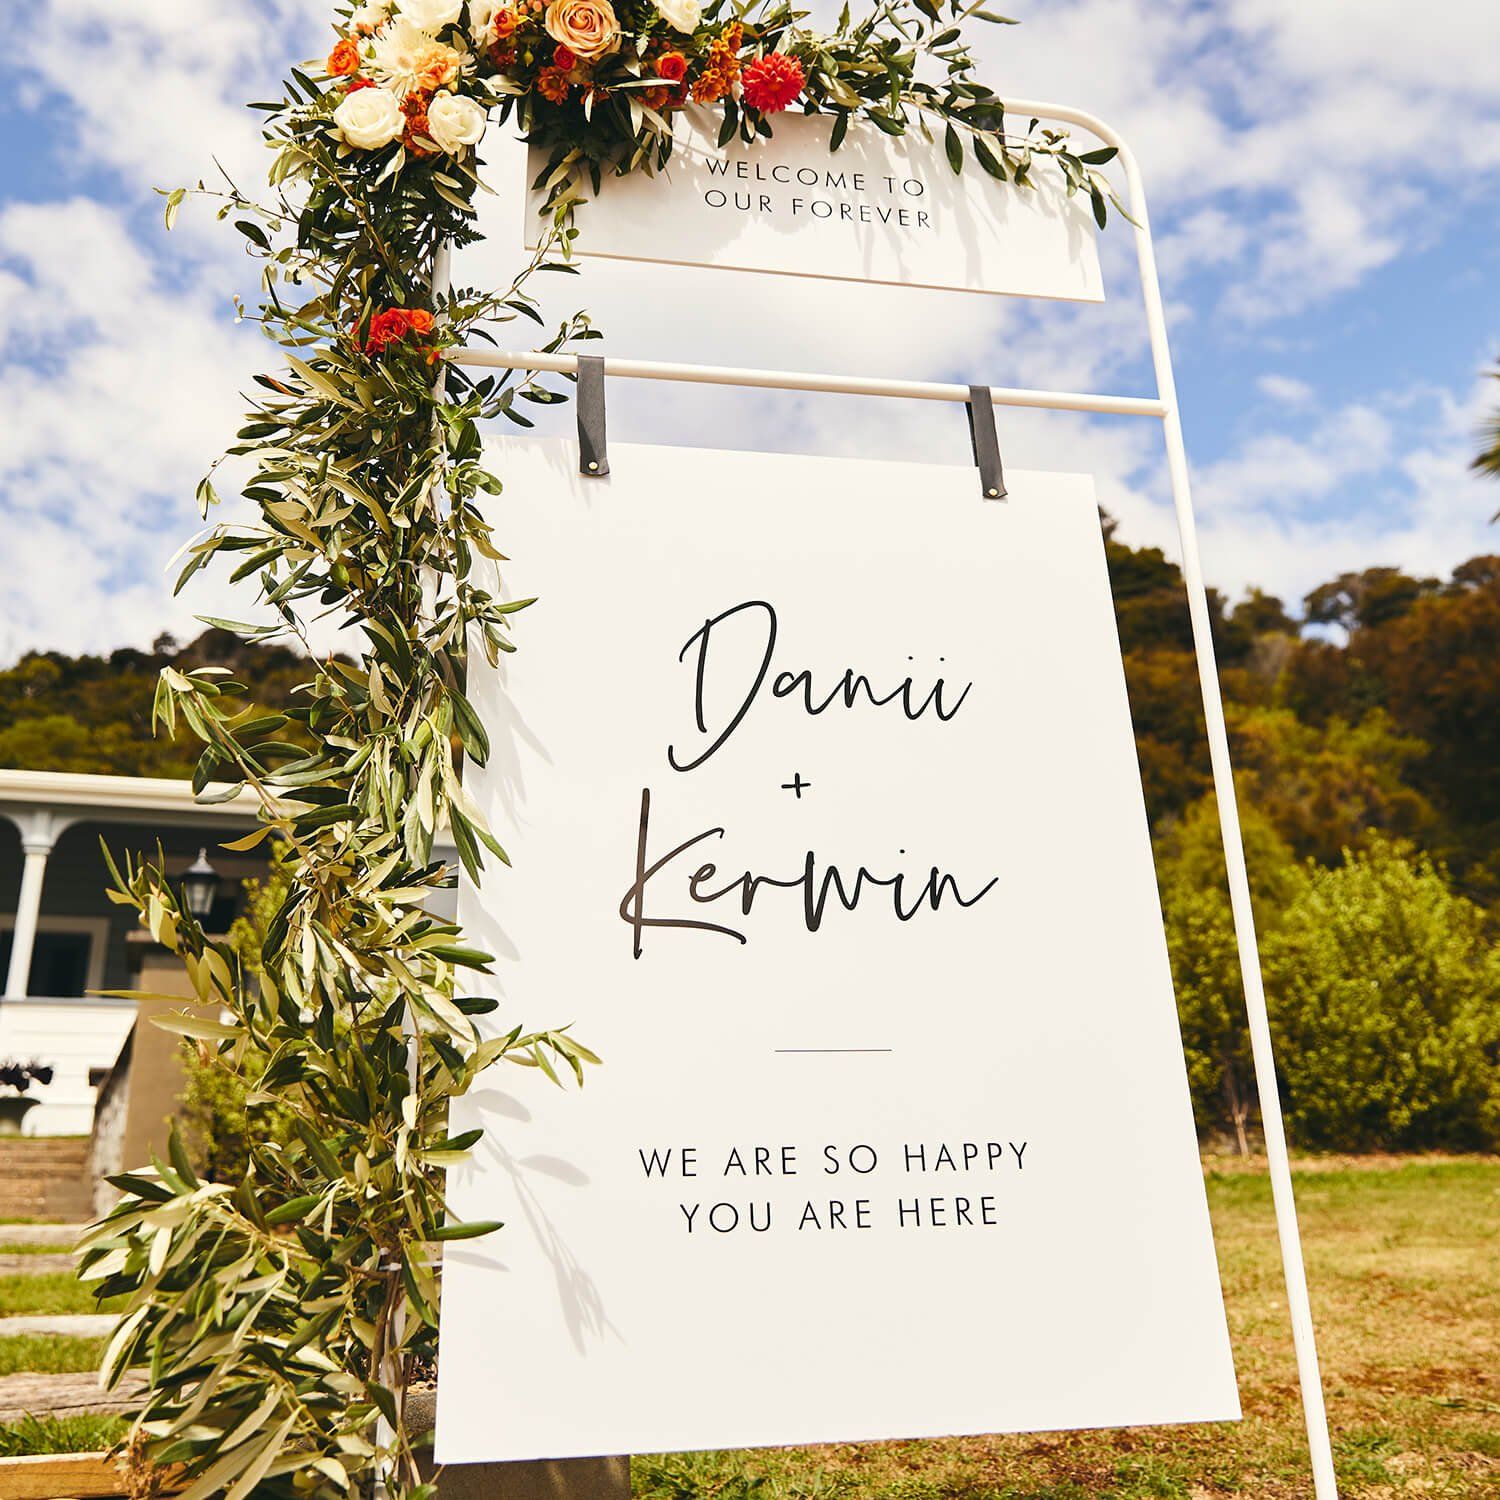 On the day wedding stationery designed by Vanilla Hayes creative graphic design  studio in Blenheim, Marlborough, New Zealand